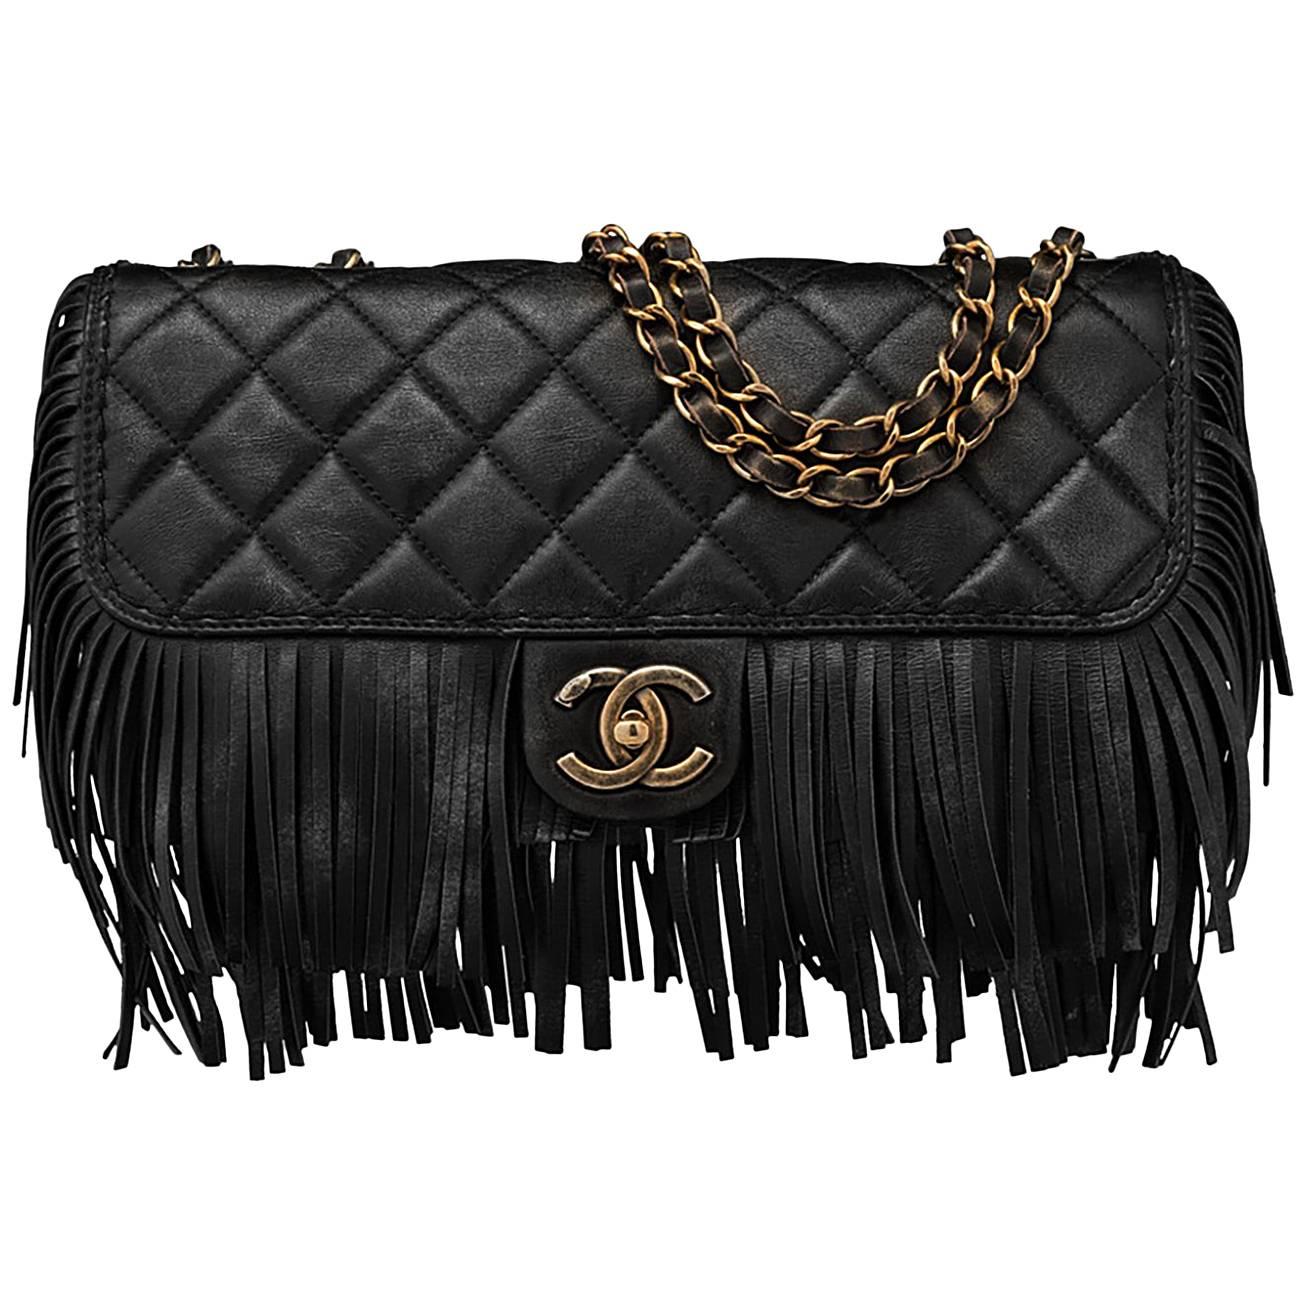 Chanel Black Quilted Nubuck Calfskin Paris/Dallas Fringe Flap Bag RT. $4, 700